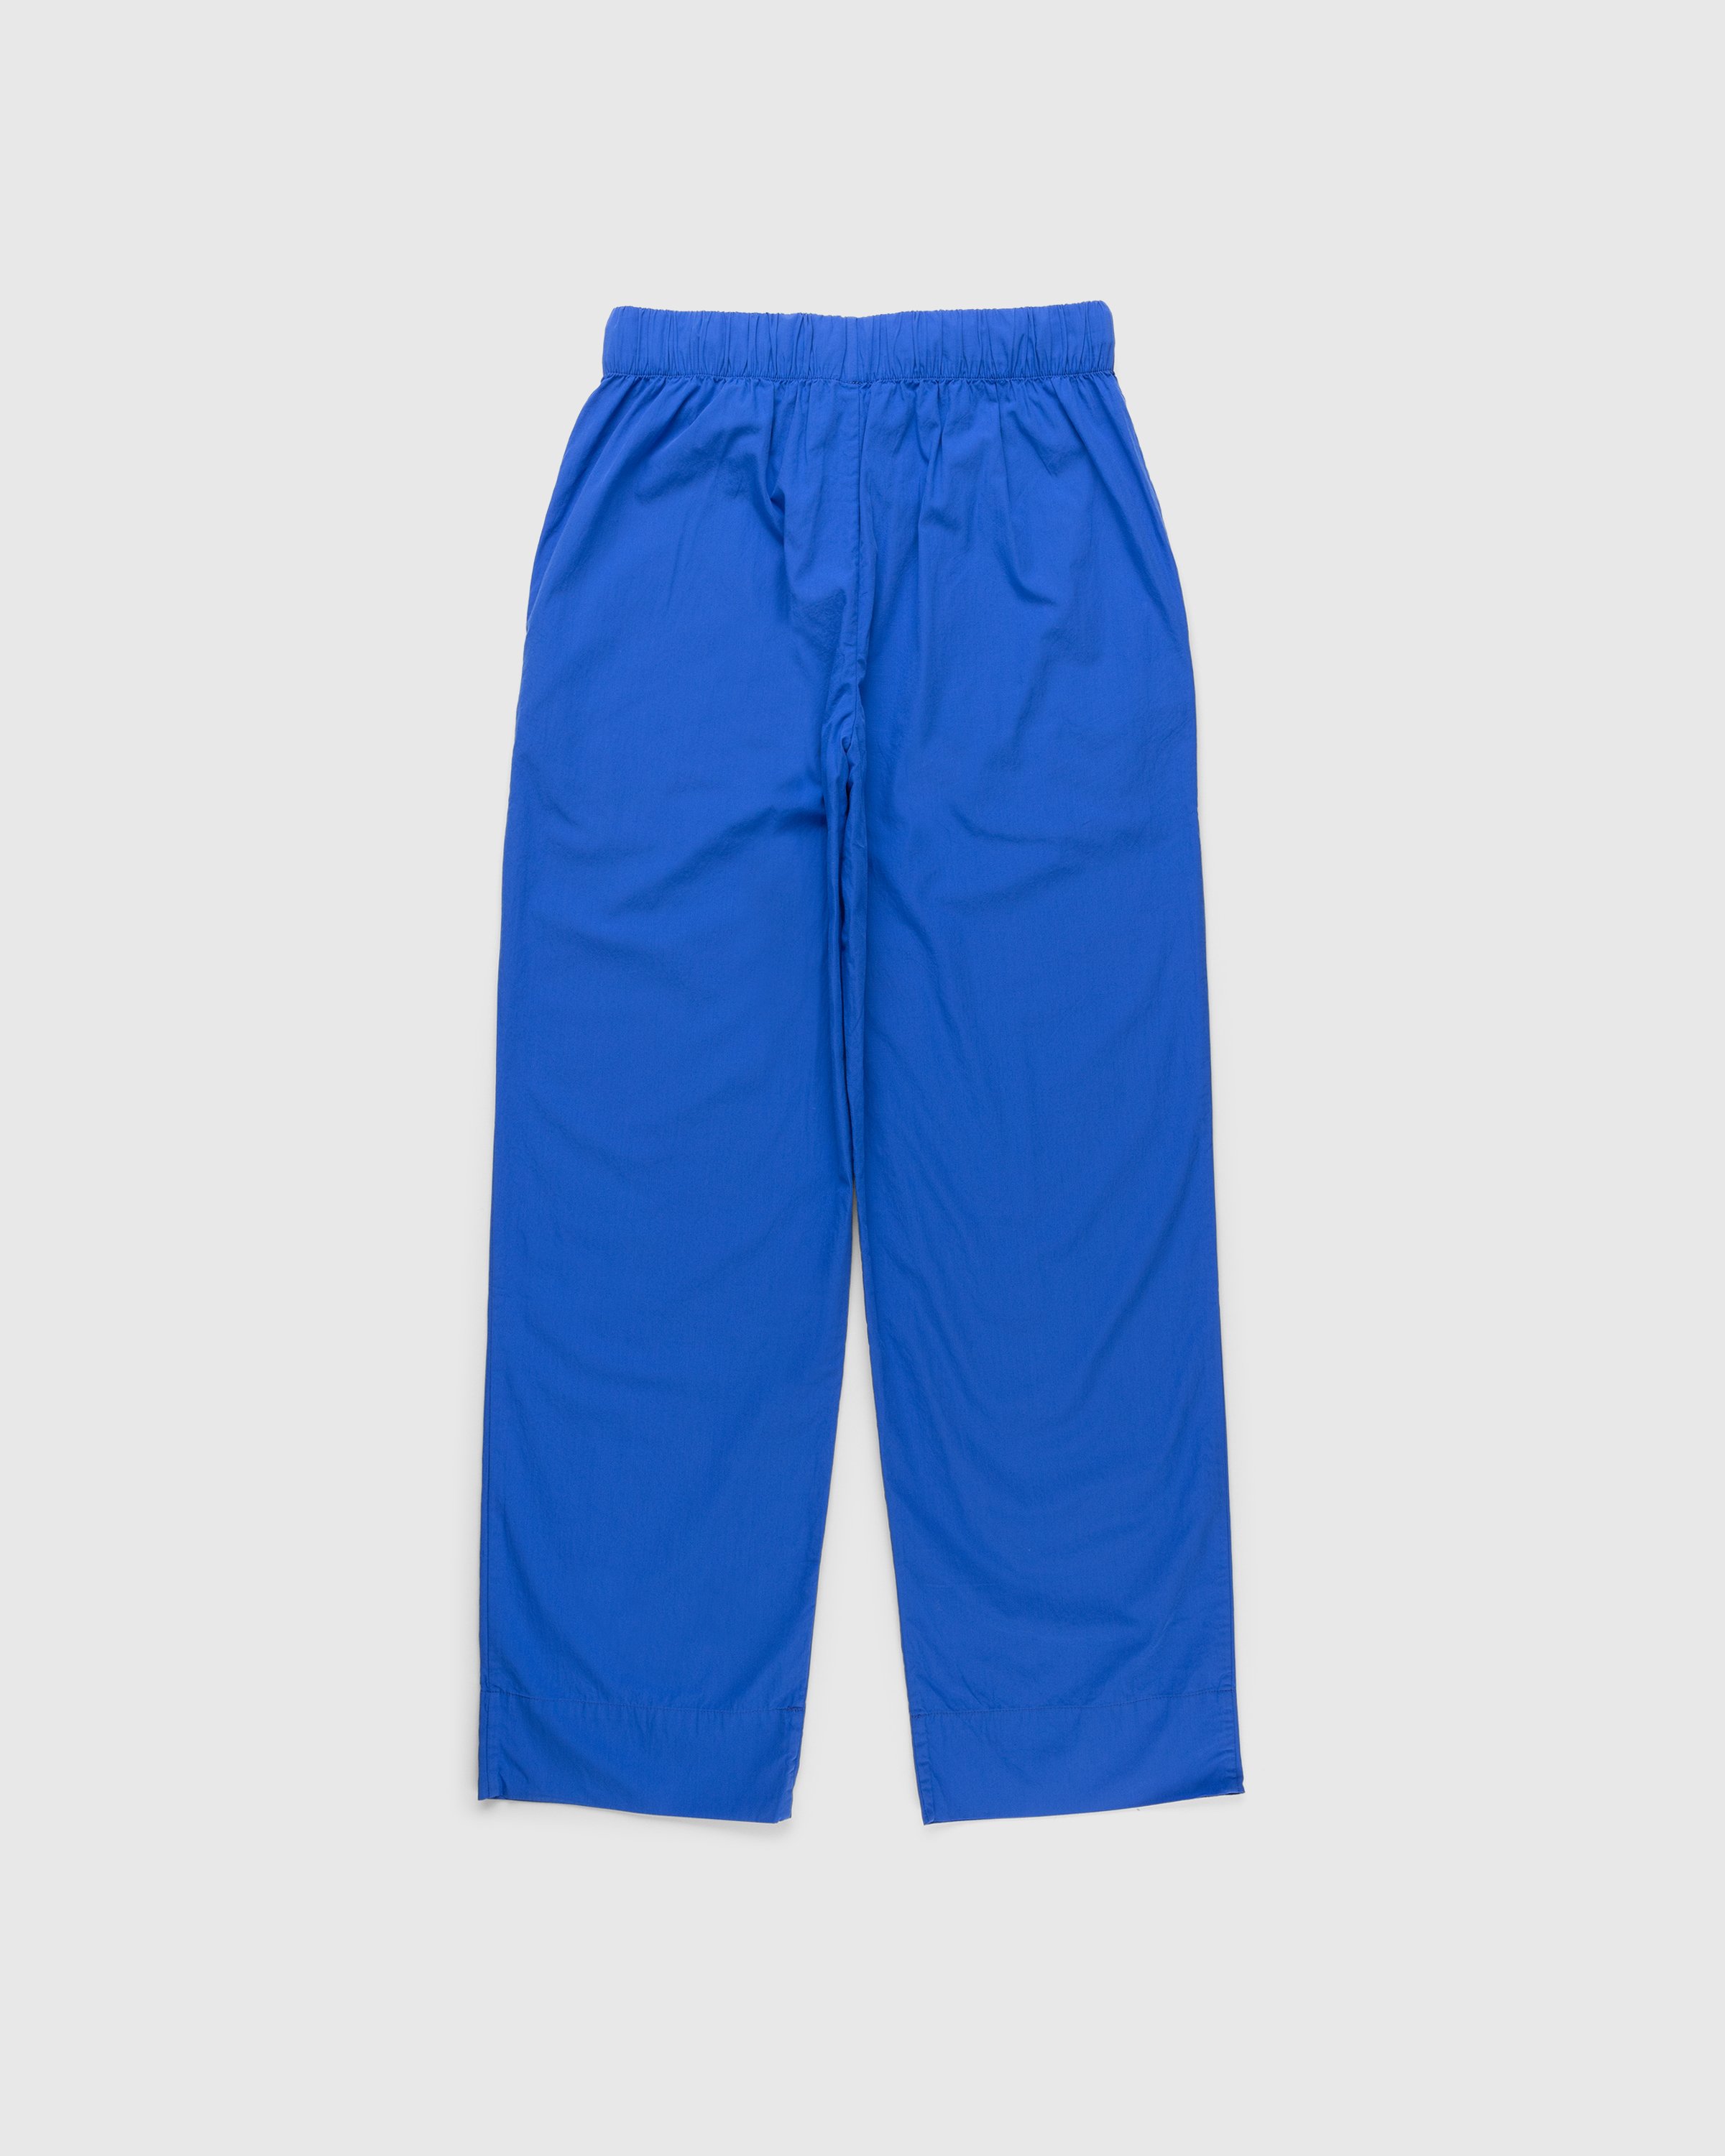 Tekla - Cotton Poplin Pyjamas Pants Royal Blue - Clothing - Blue - Image 2